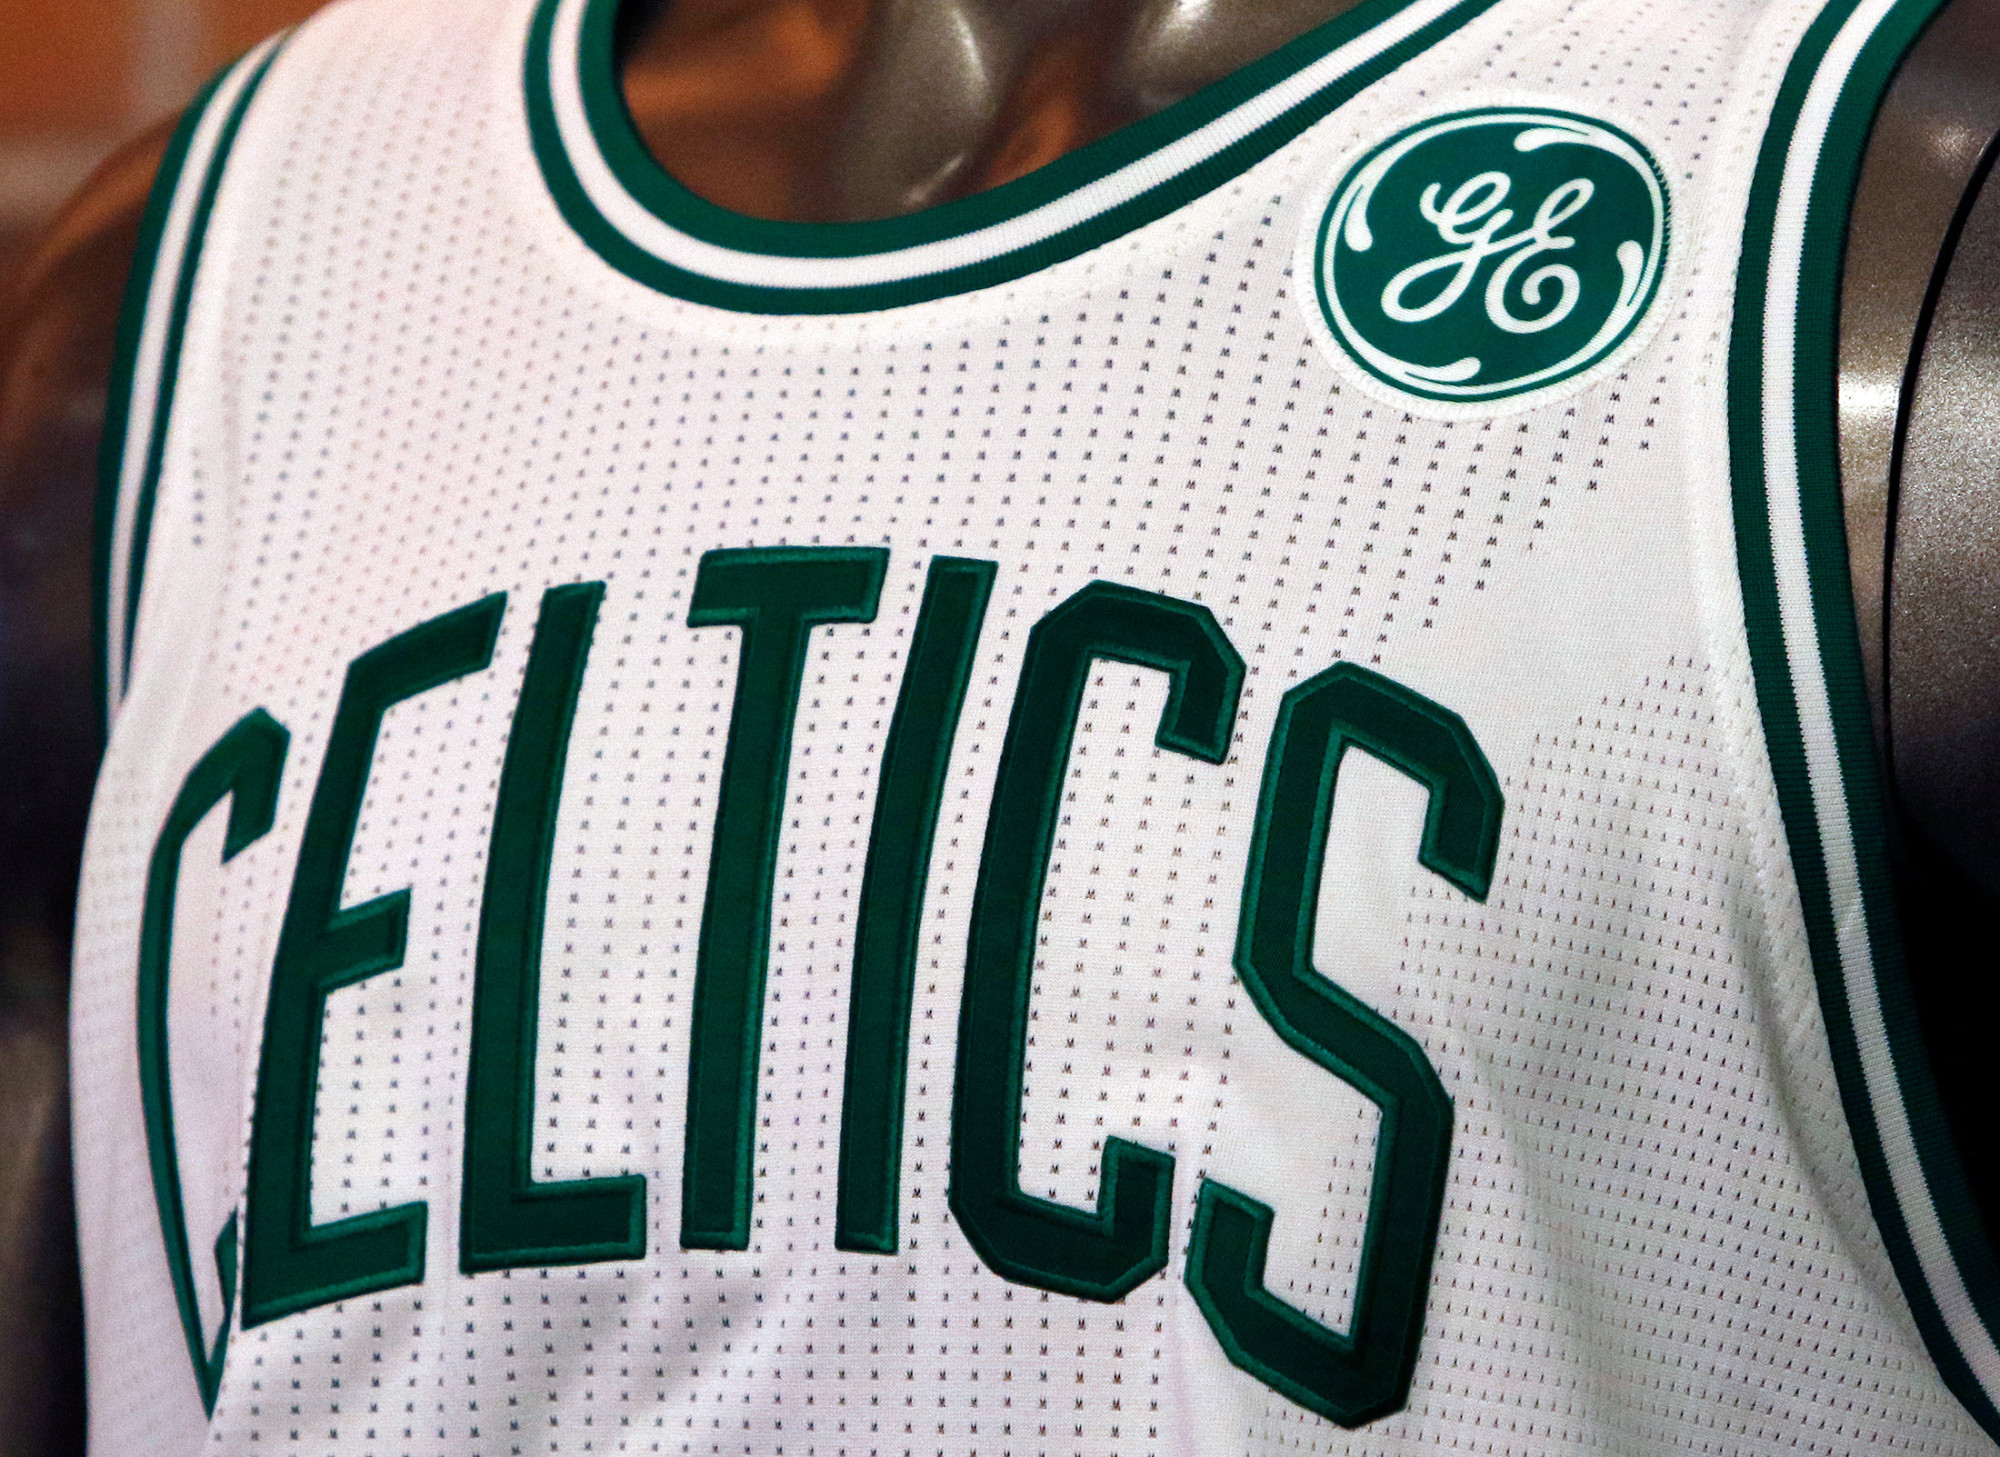 Celtics Boston China Trade,Buy China Direct From Celtics Boston Factories  at